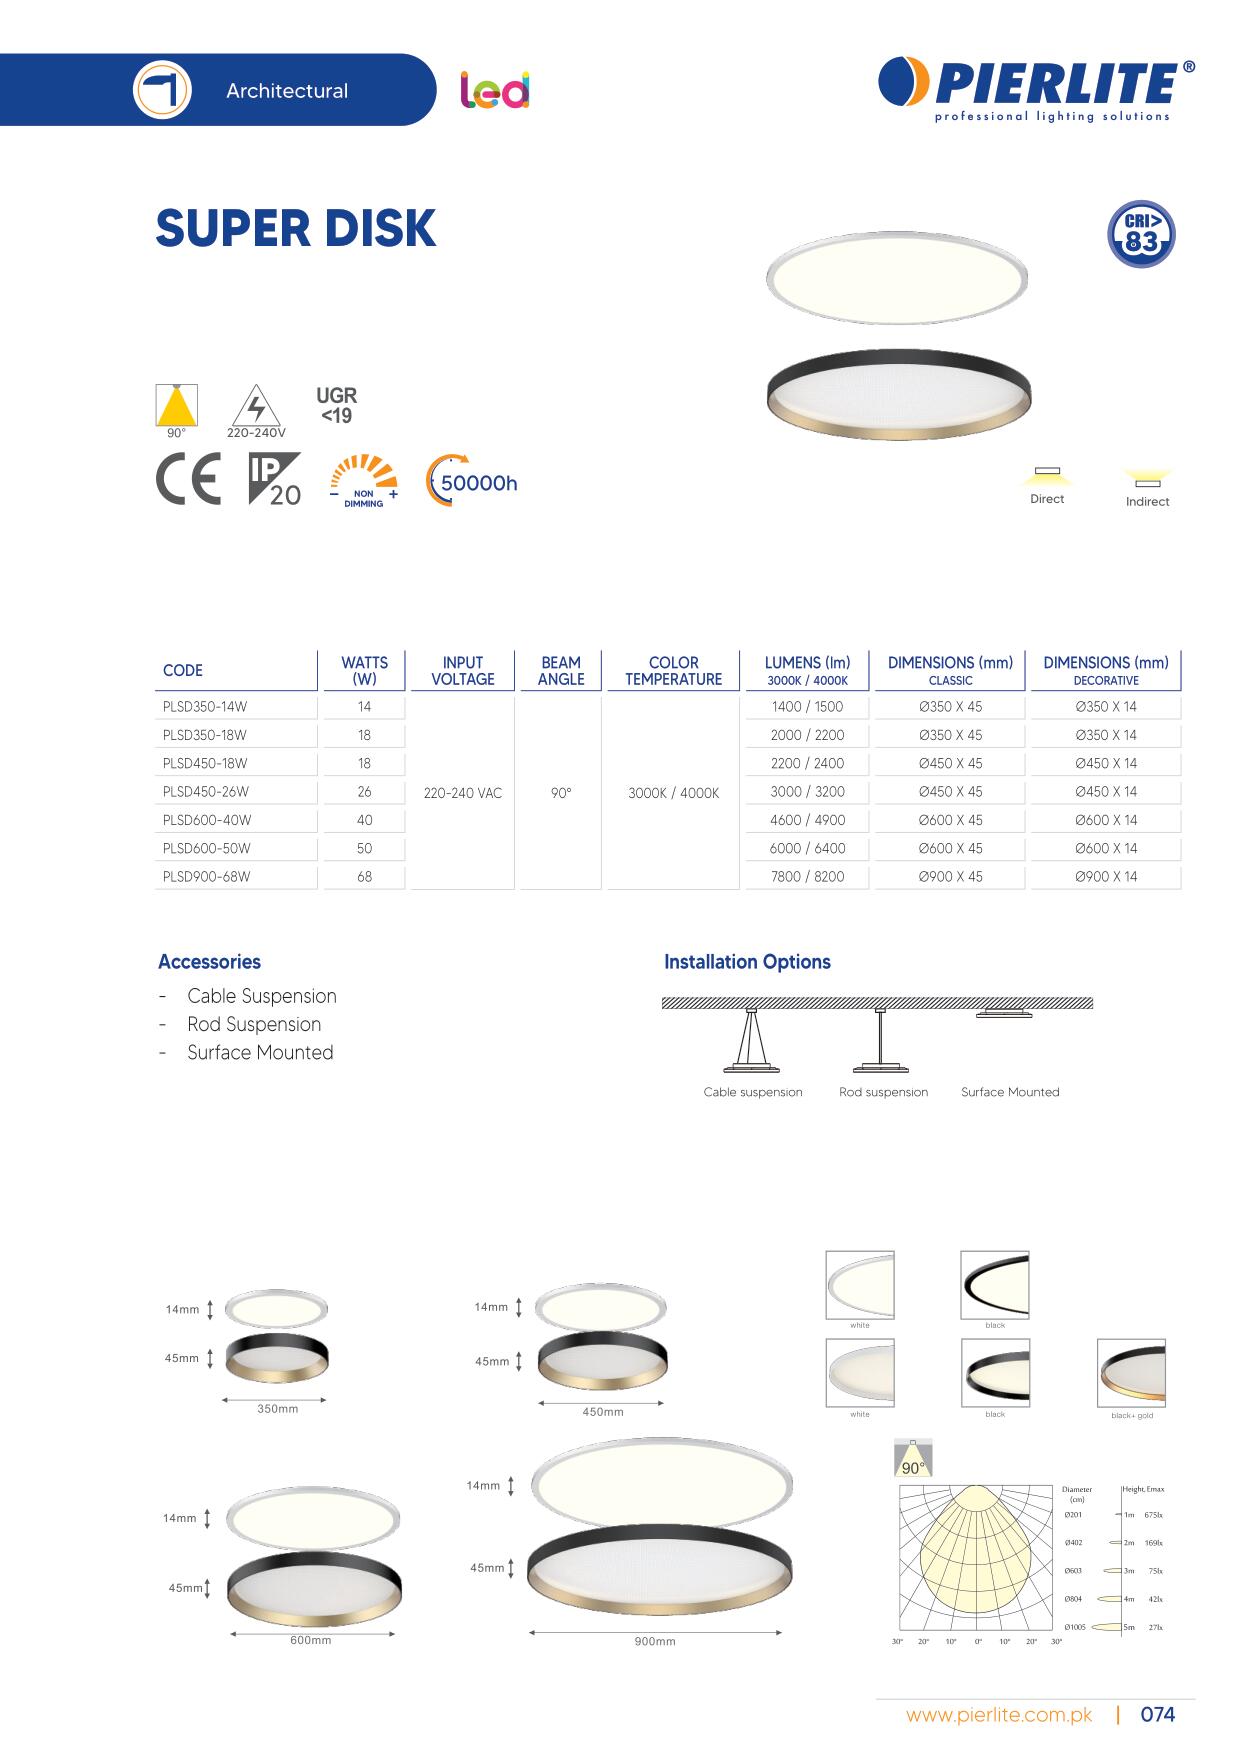 Pierlite LED Luminaire Catalog 2021-83